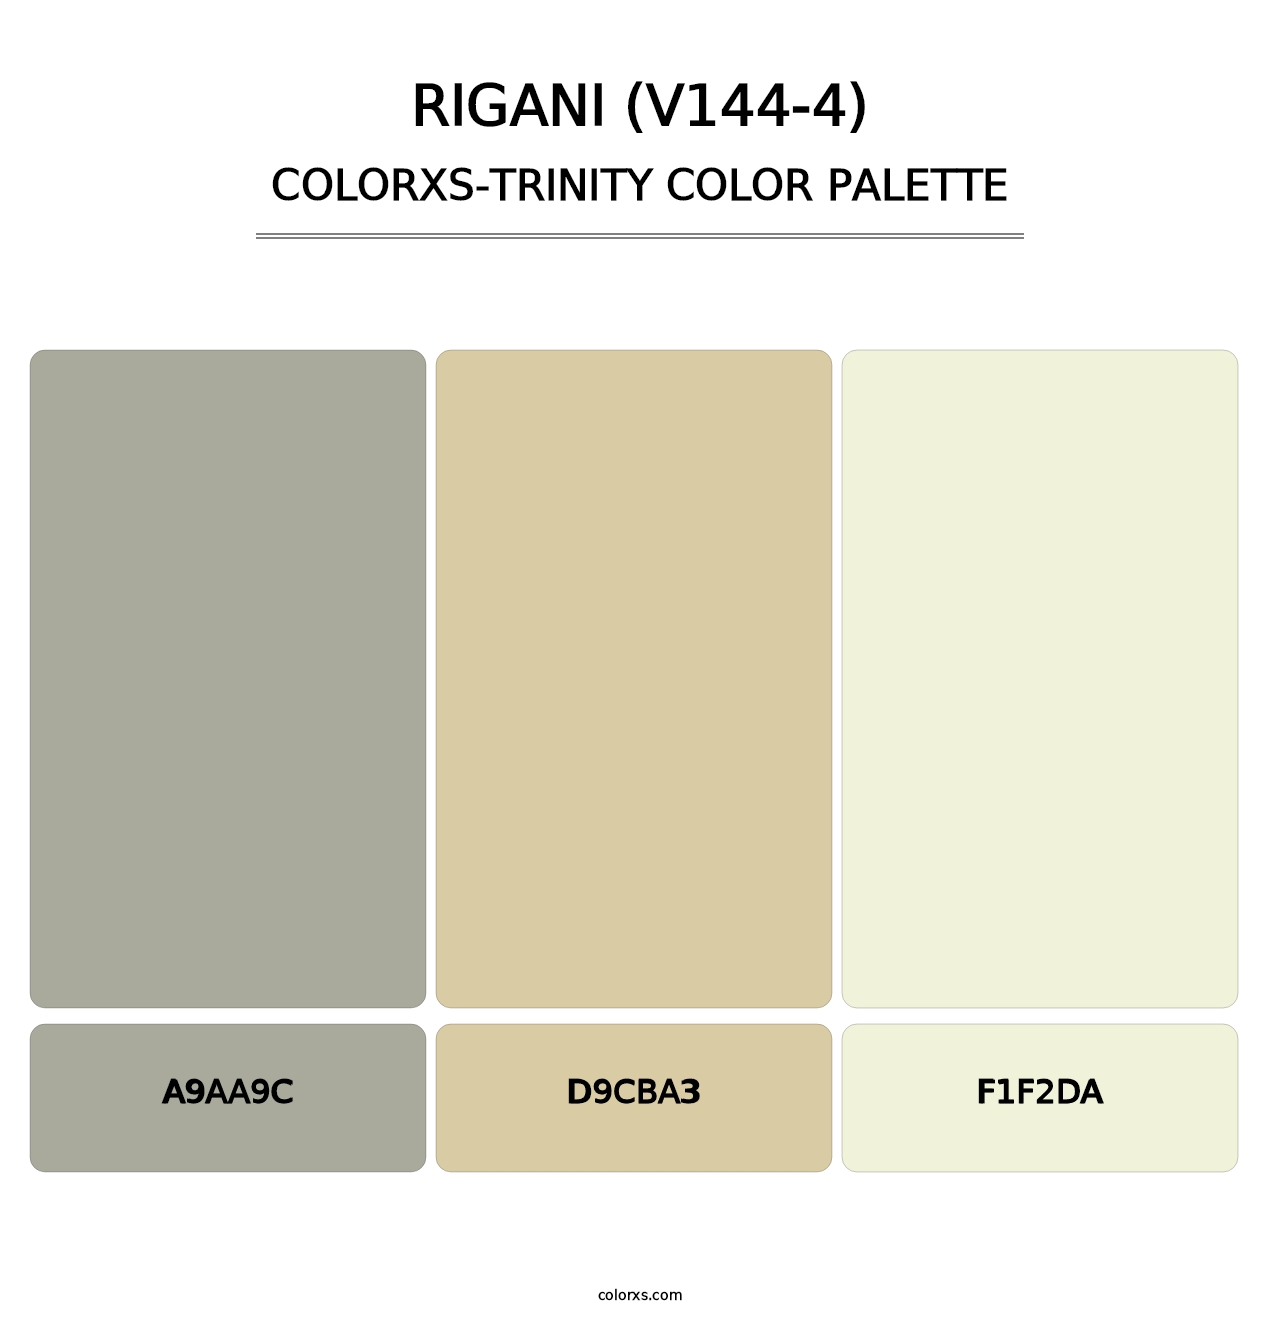 Rigani (V144-4) - Colorxs Trinity Palette